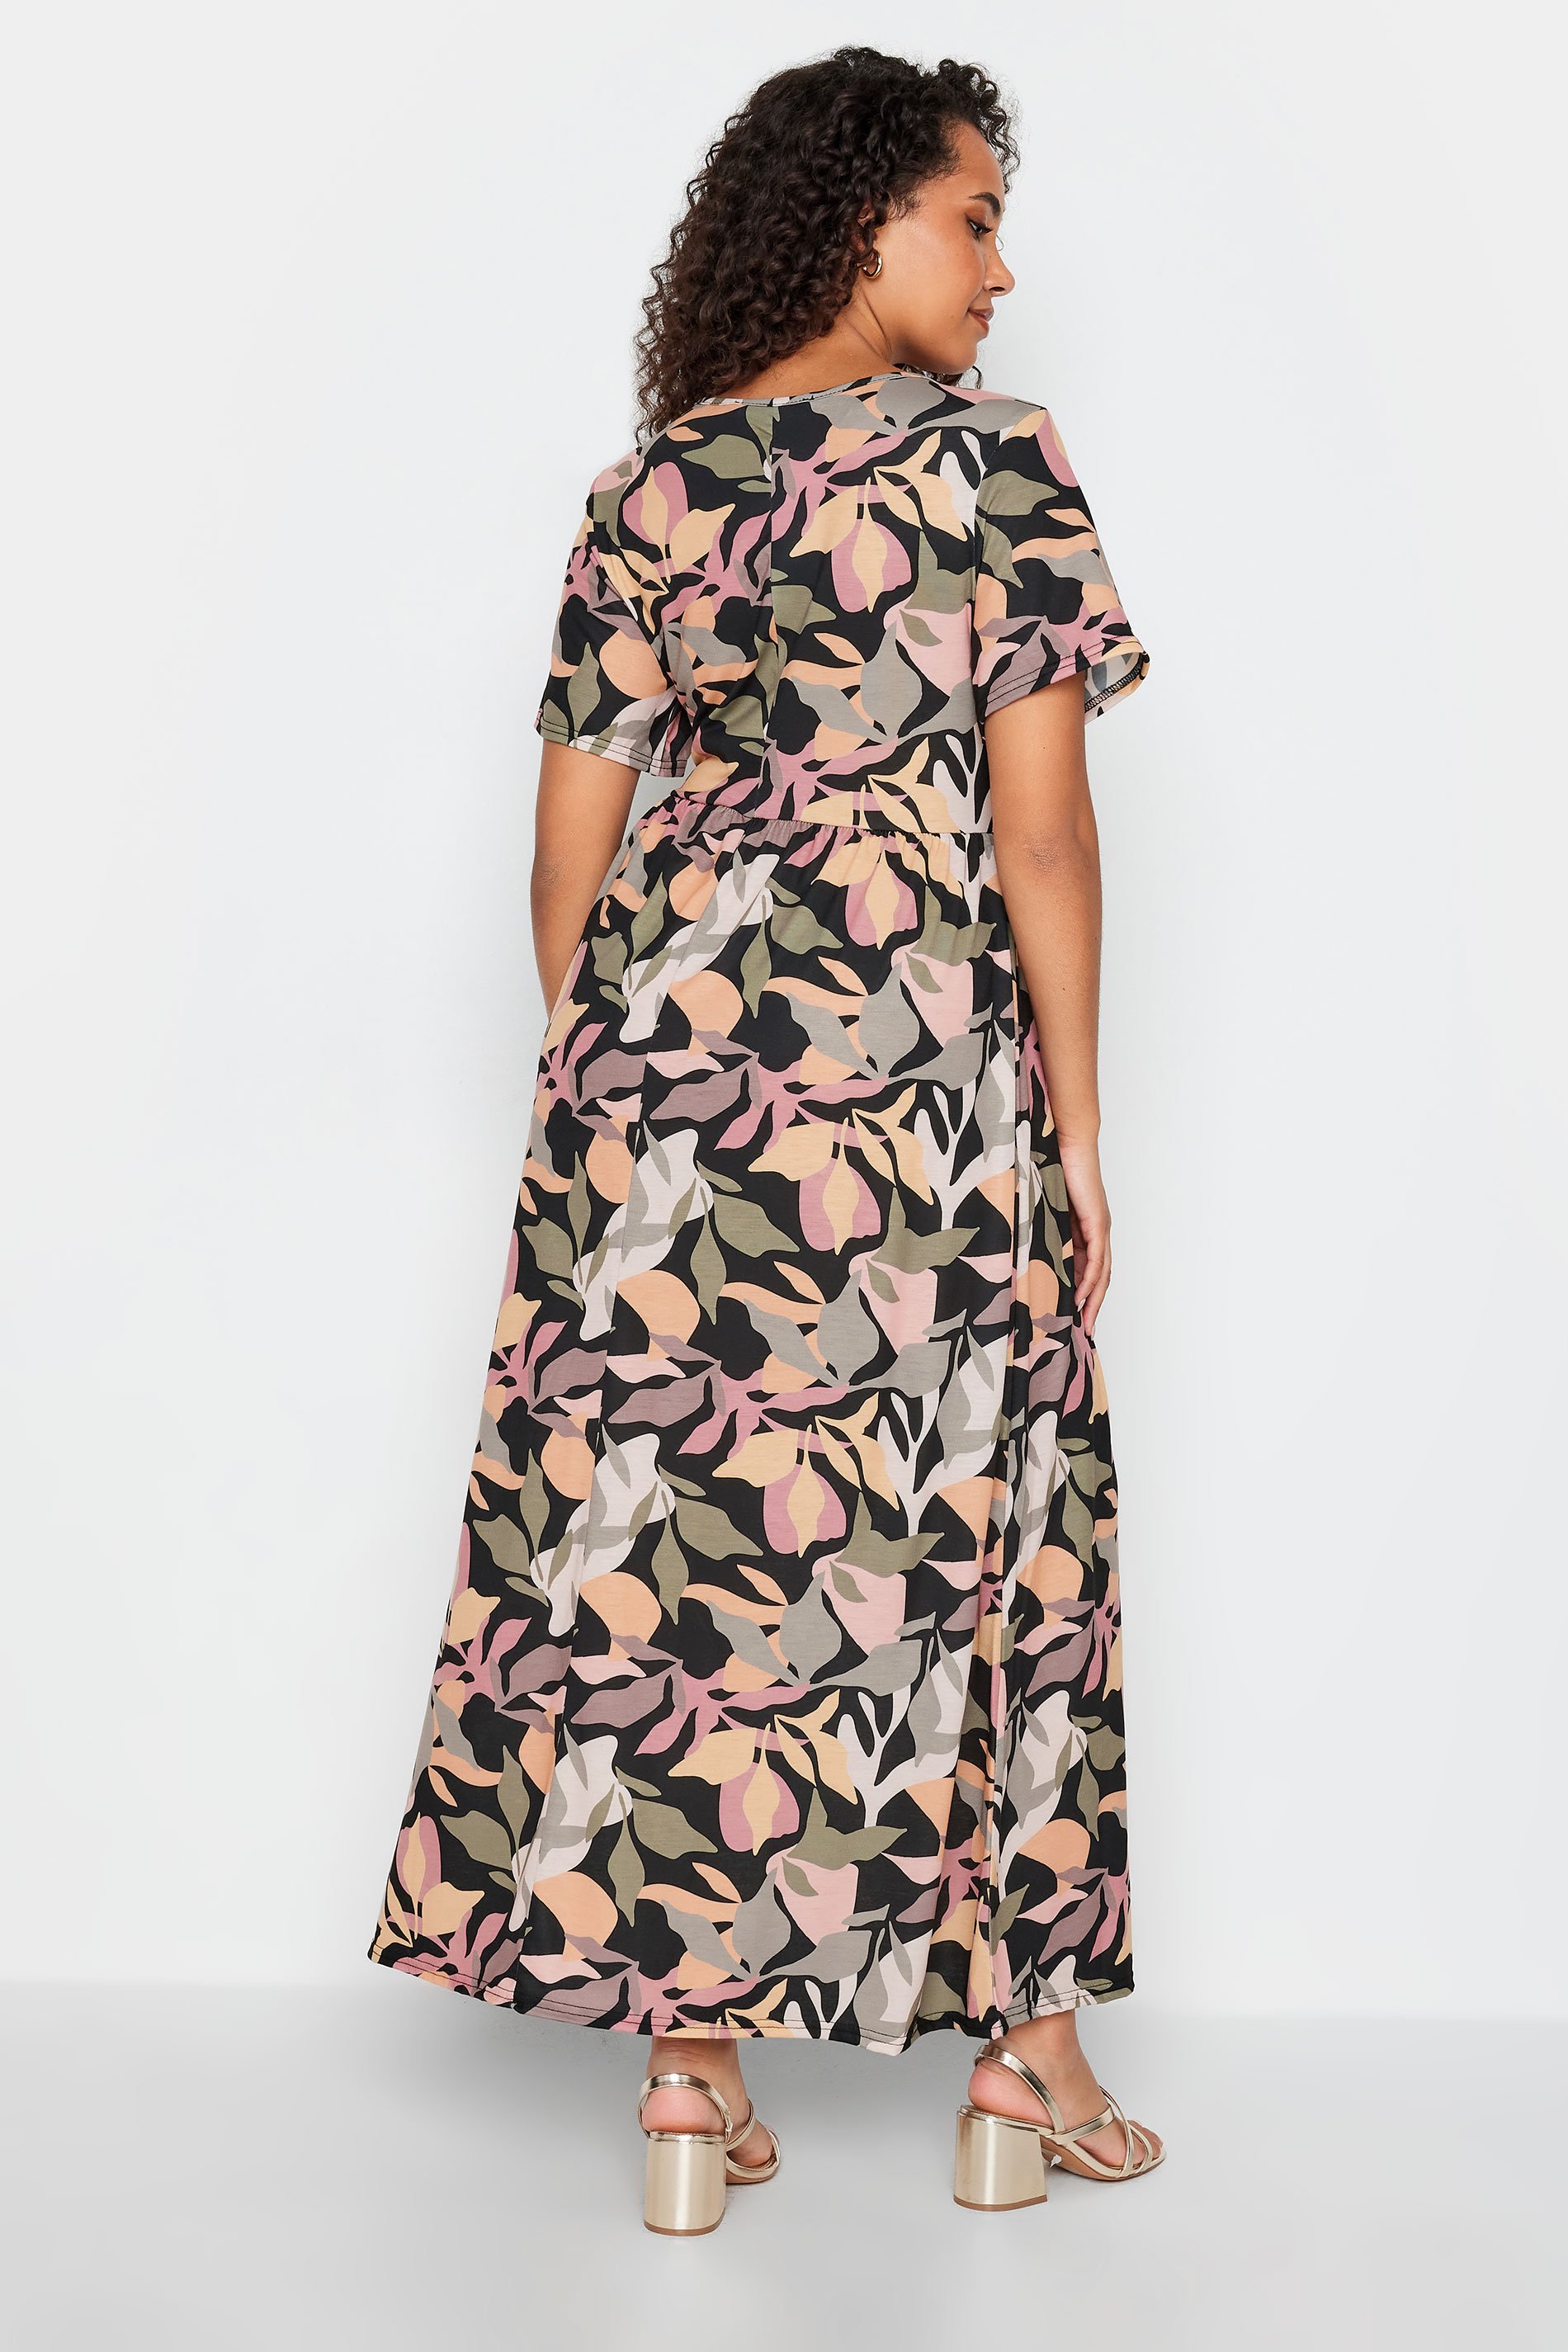 M&Co Black Tropical Print Maxi Dress | M&Co  3